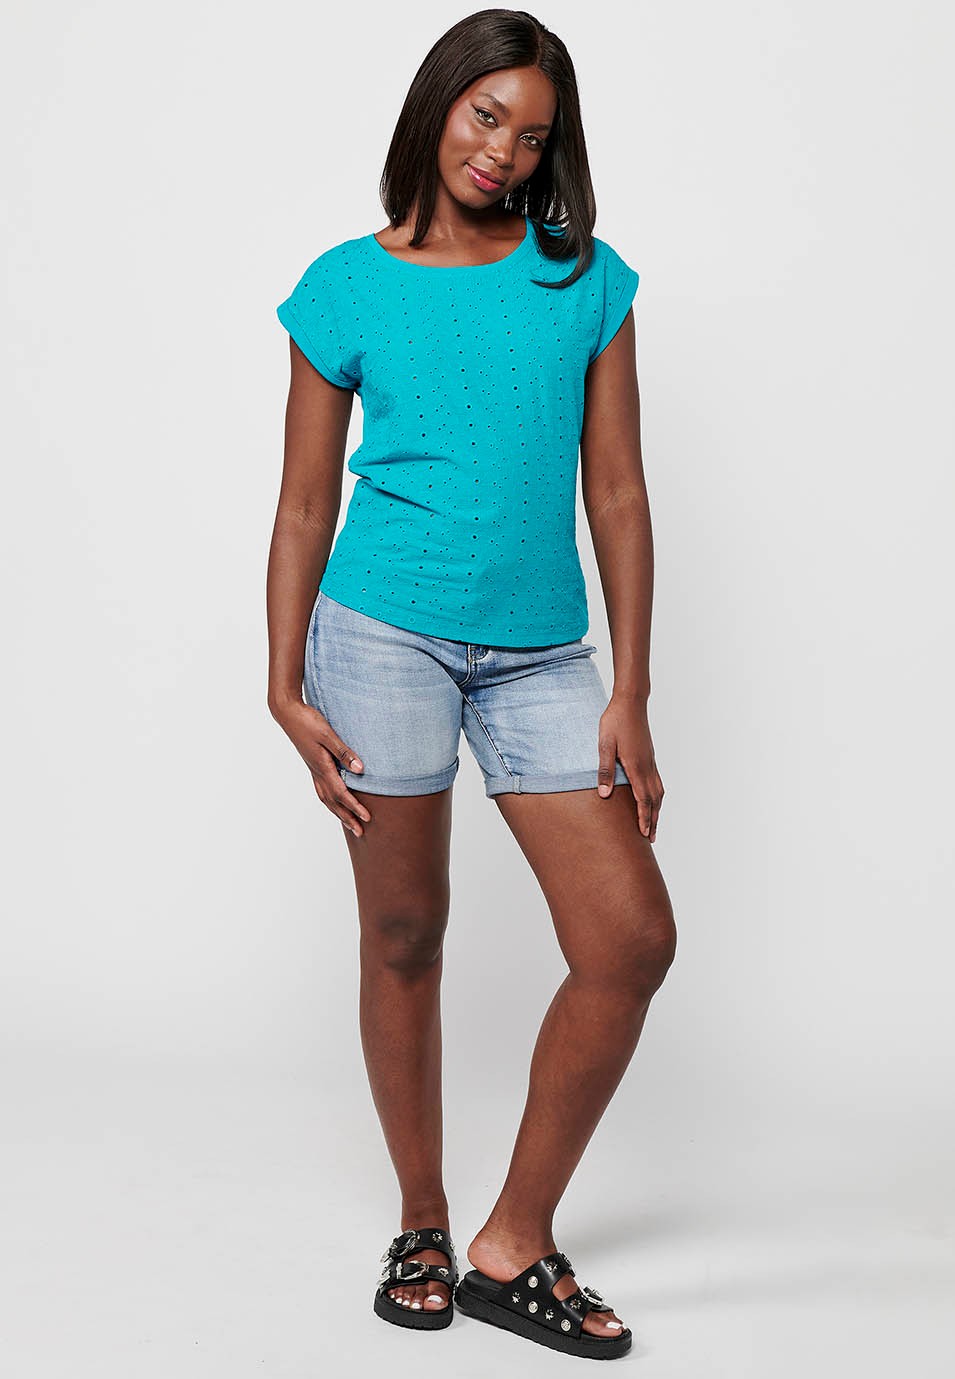 Camiseta de manga corta bordado, escote redondo, color aguamarina para mujer